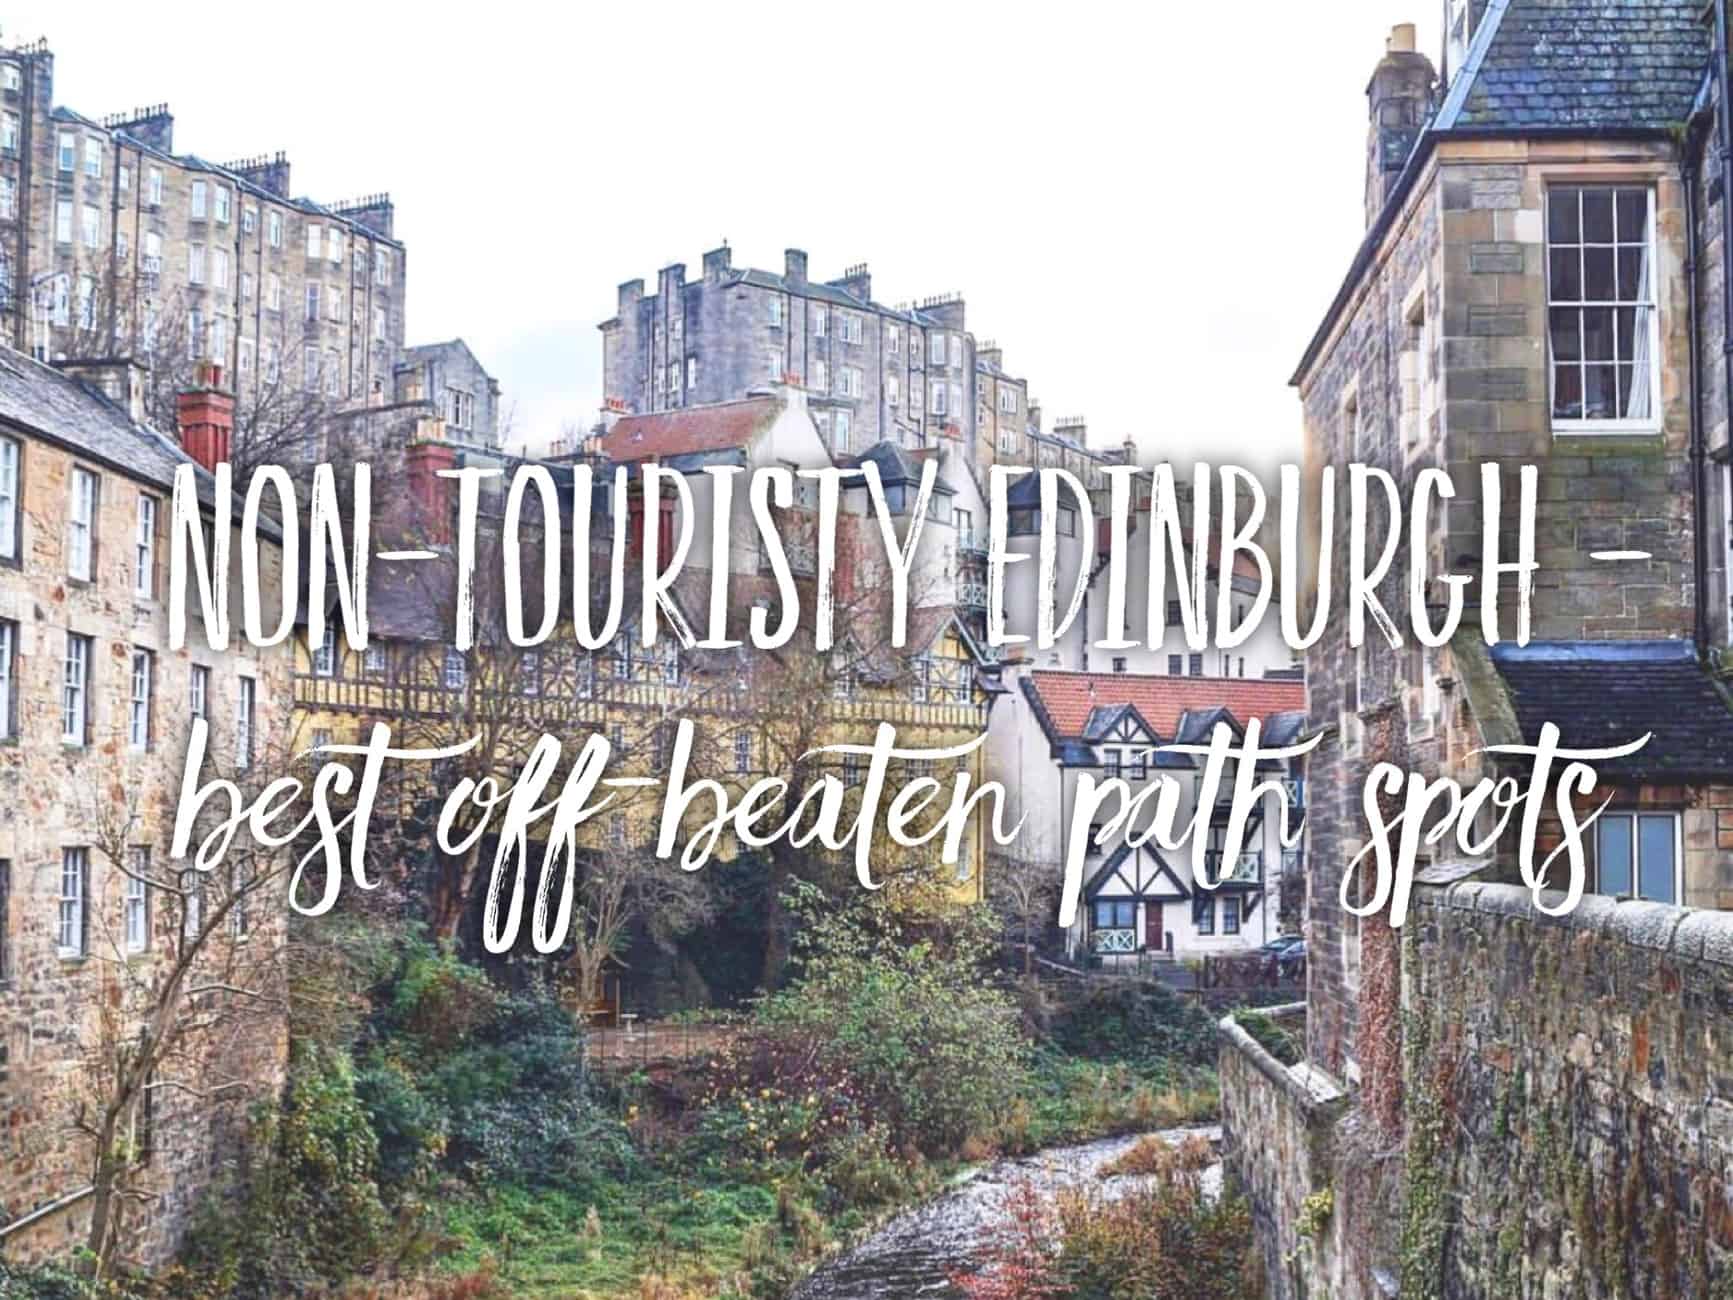 Non-touristy Edinburgh: 7 off-beaten path spots that are a must